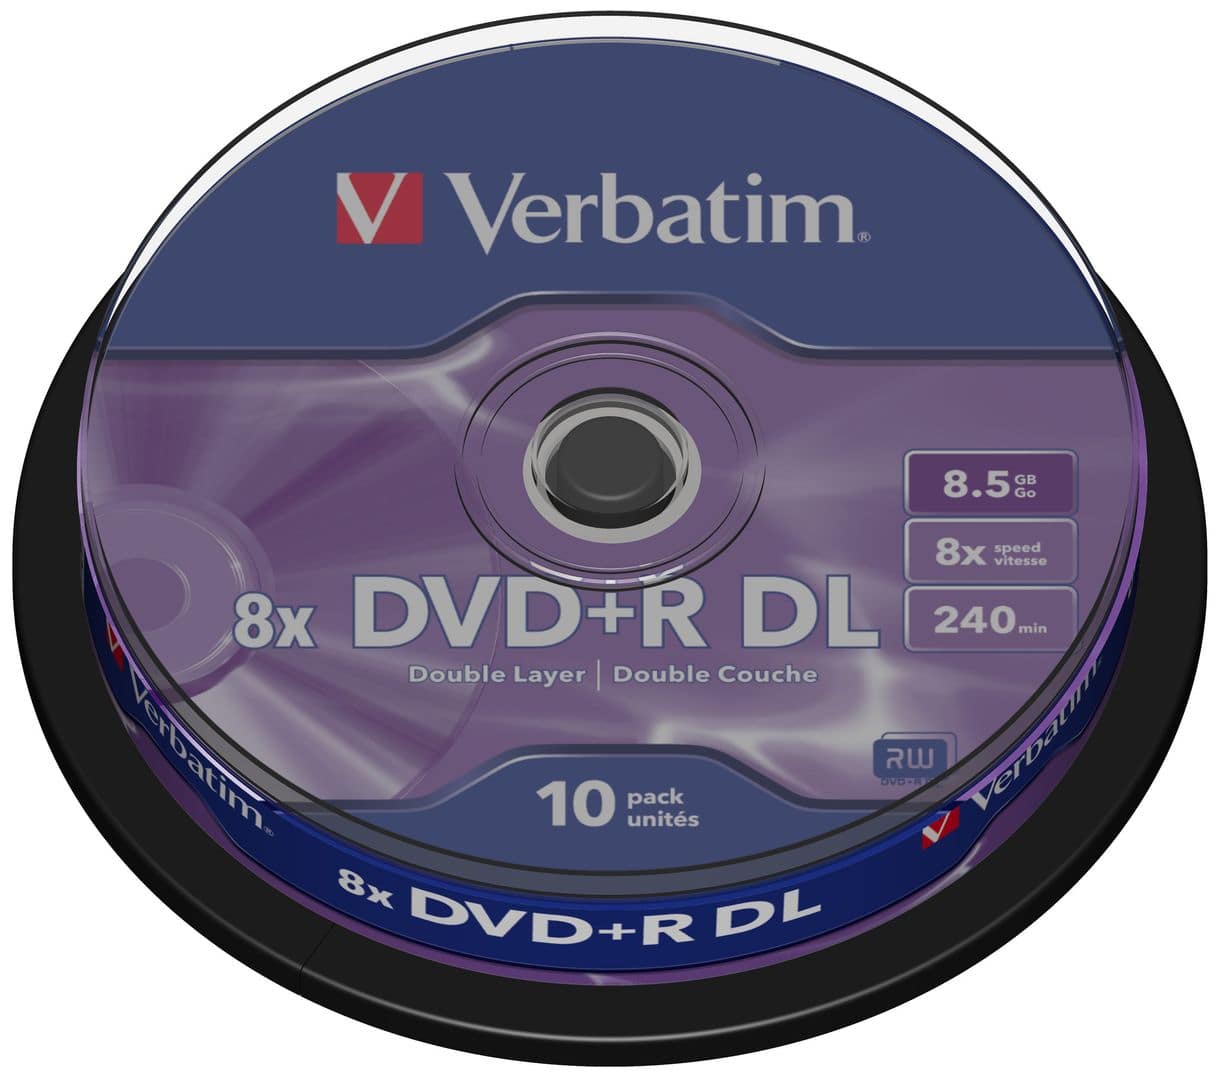 VB-DPD55S1 